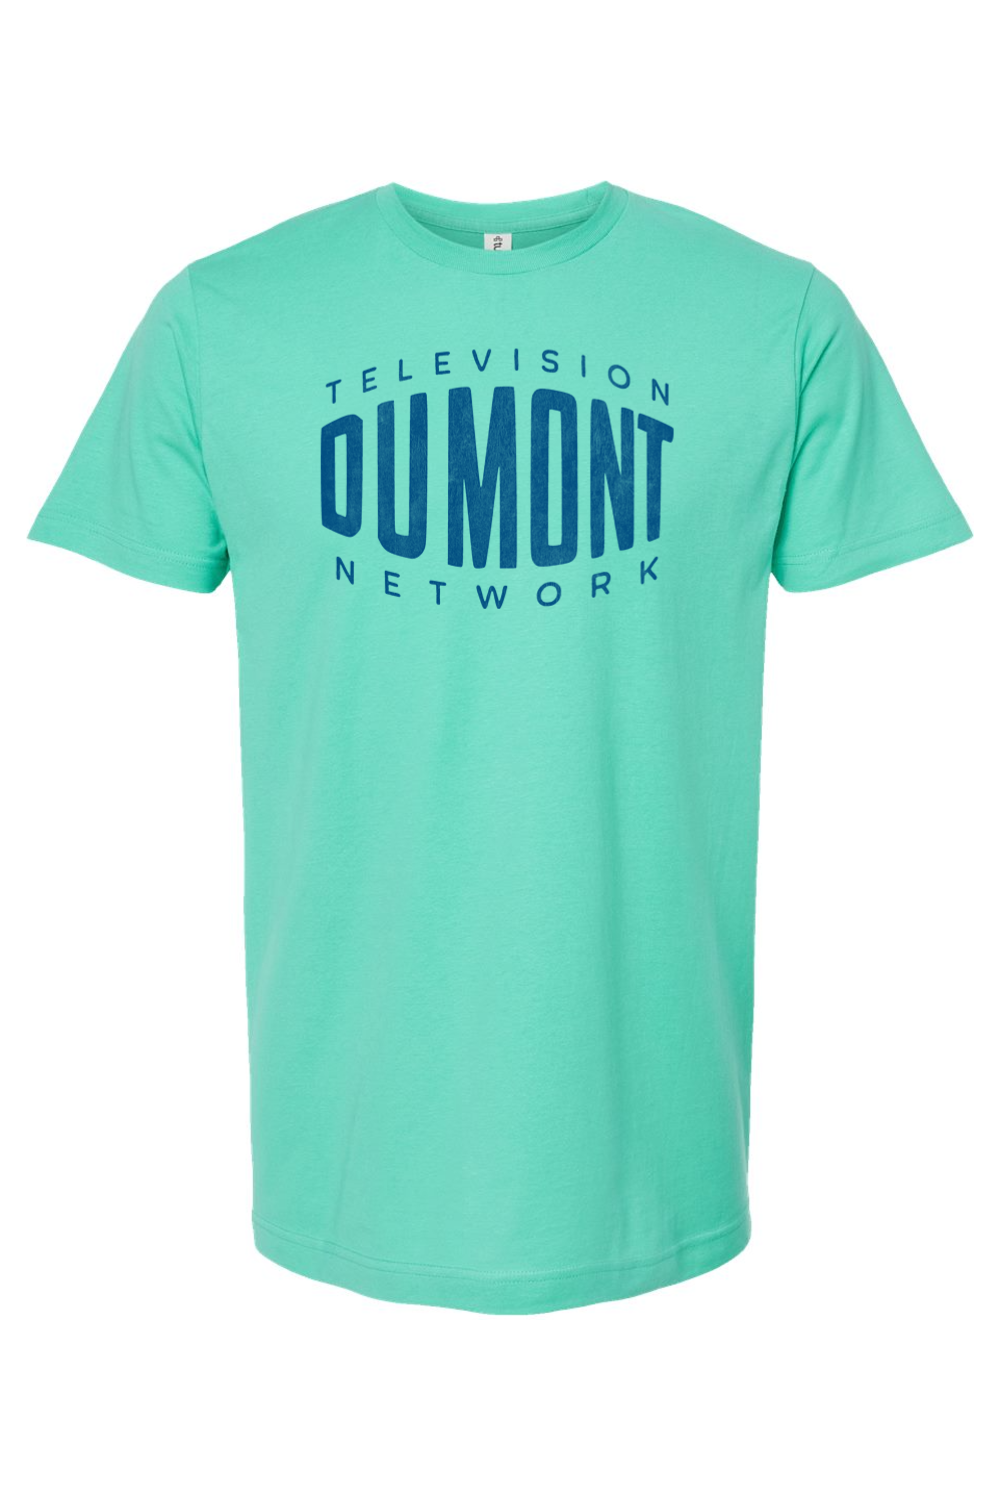 Dumont Television Network - Yinzylvania